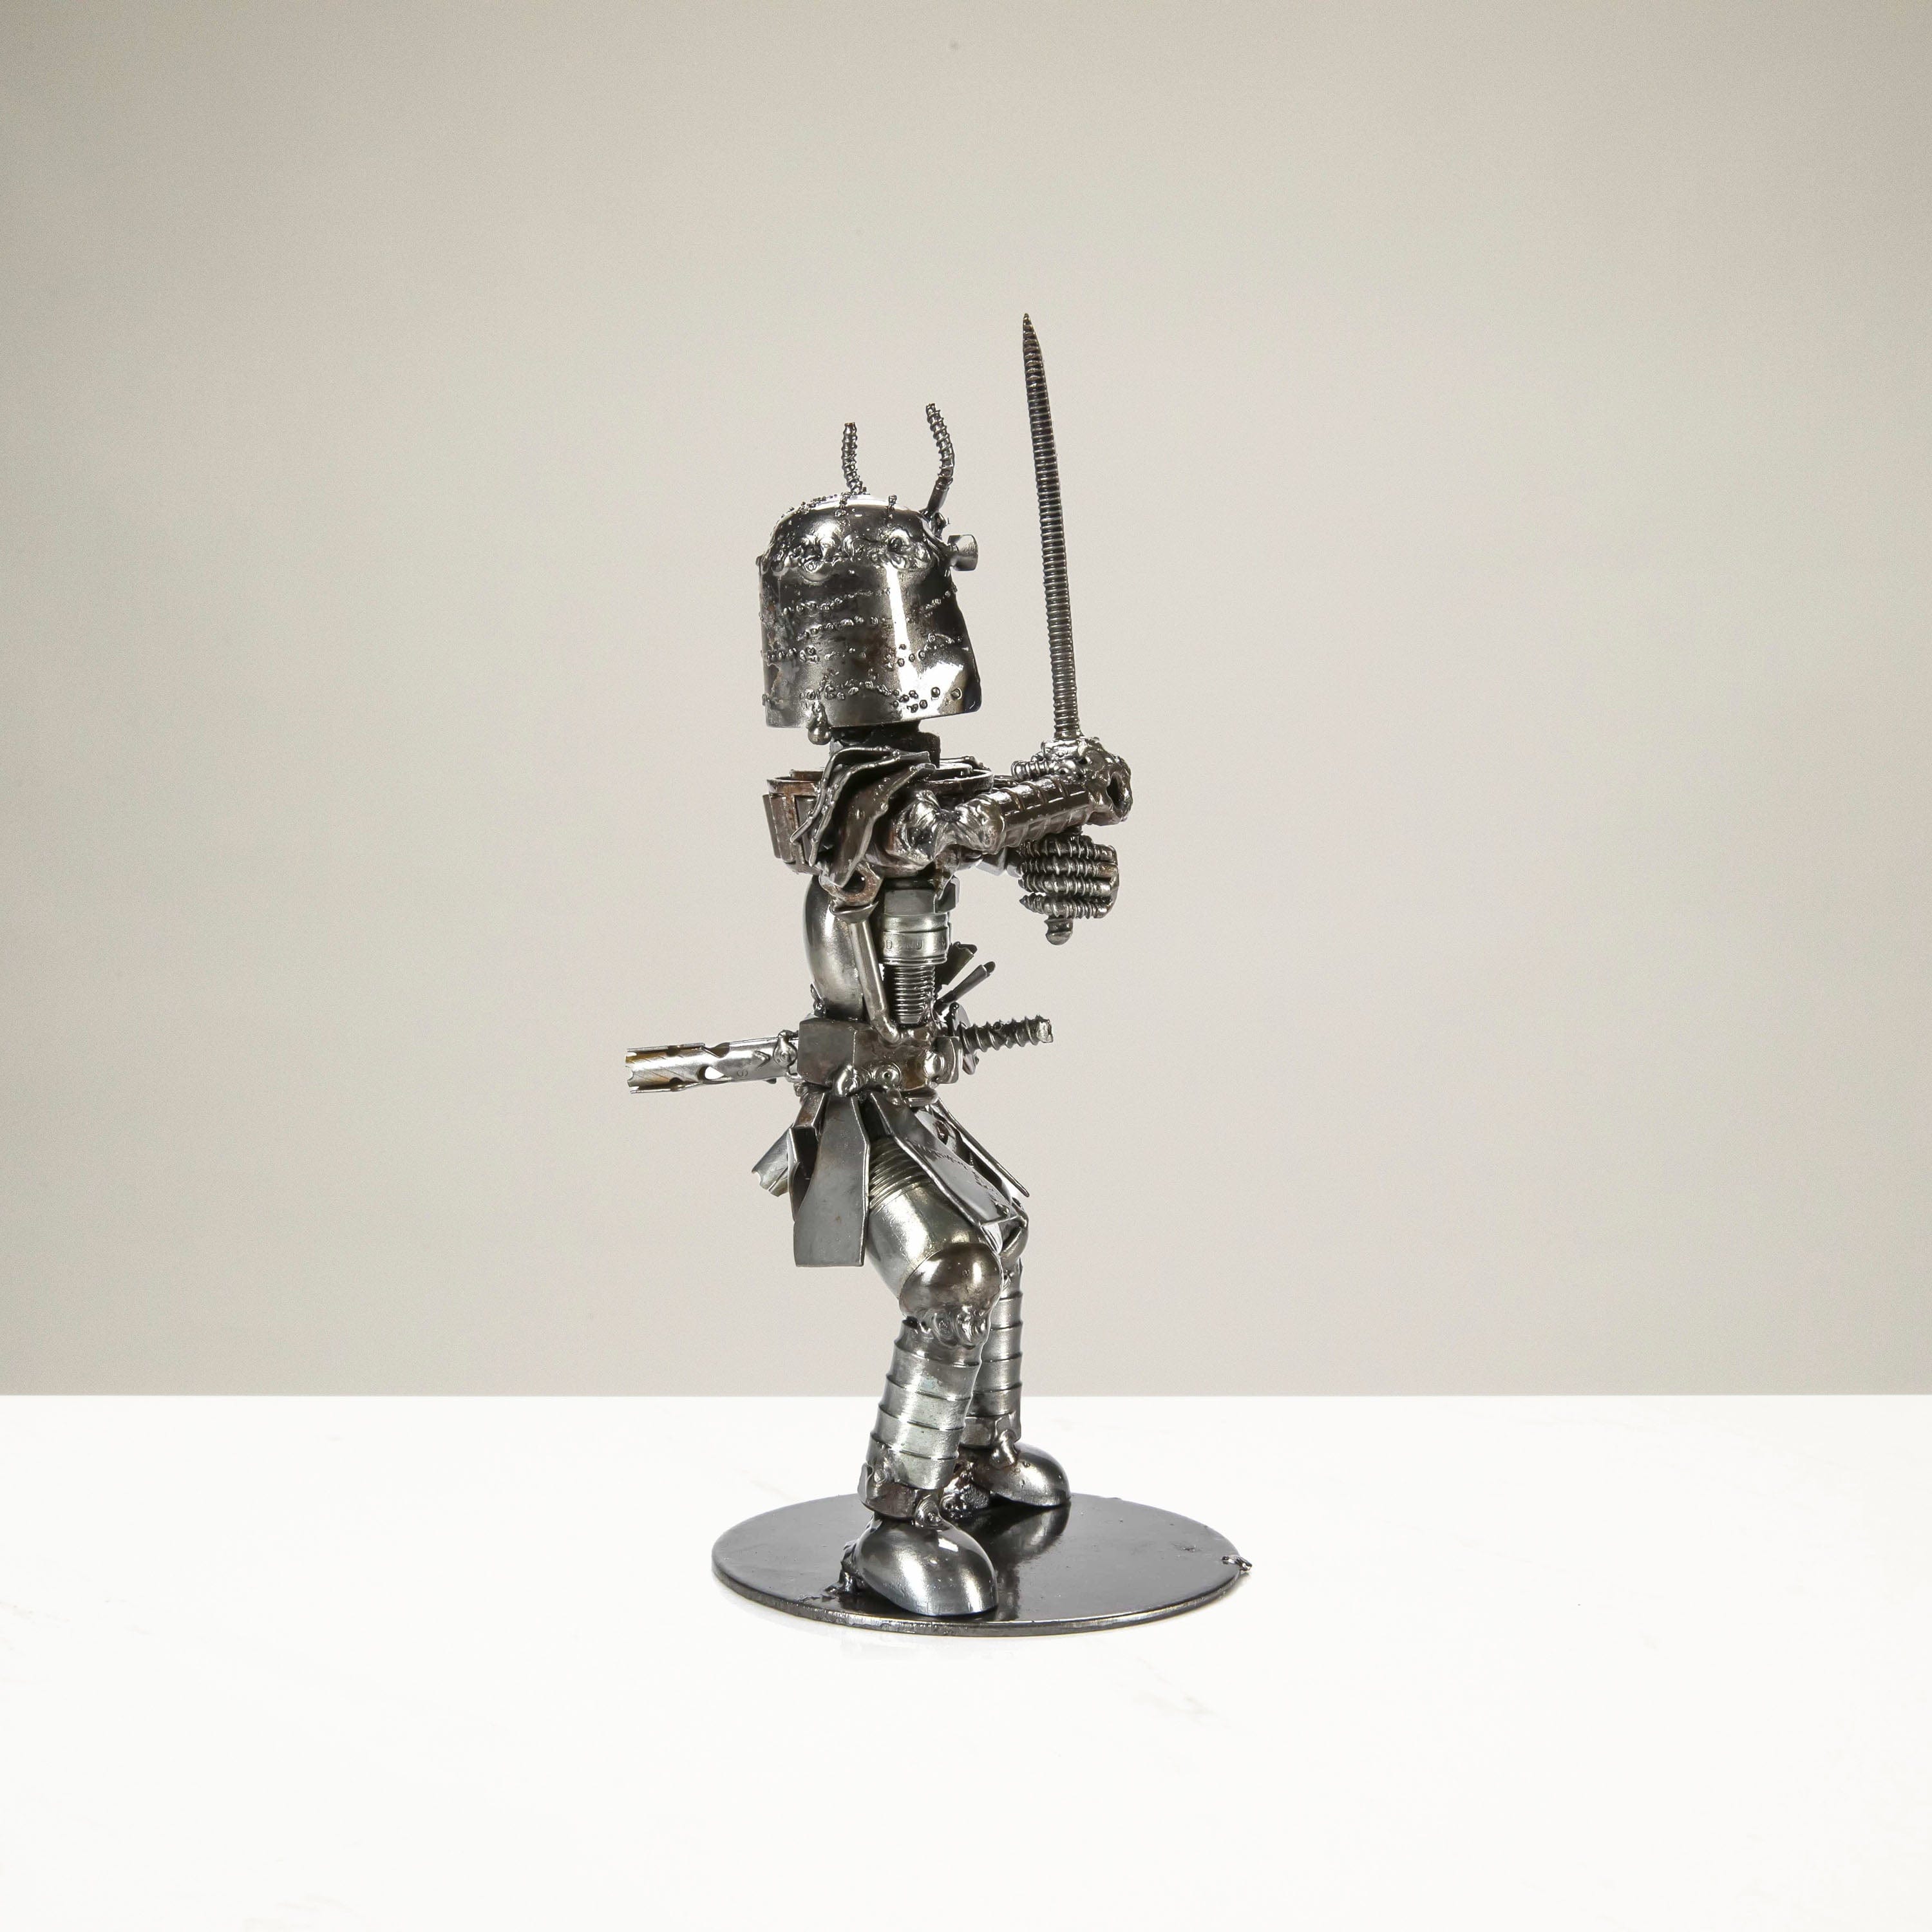 Kalifano Recycled Metal Art Samurai Inspired Recycled Metal Sculpture RMS-500SAM-N